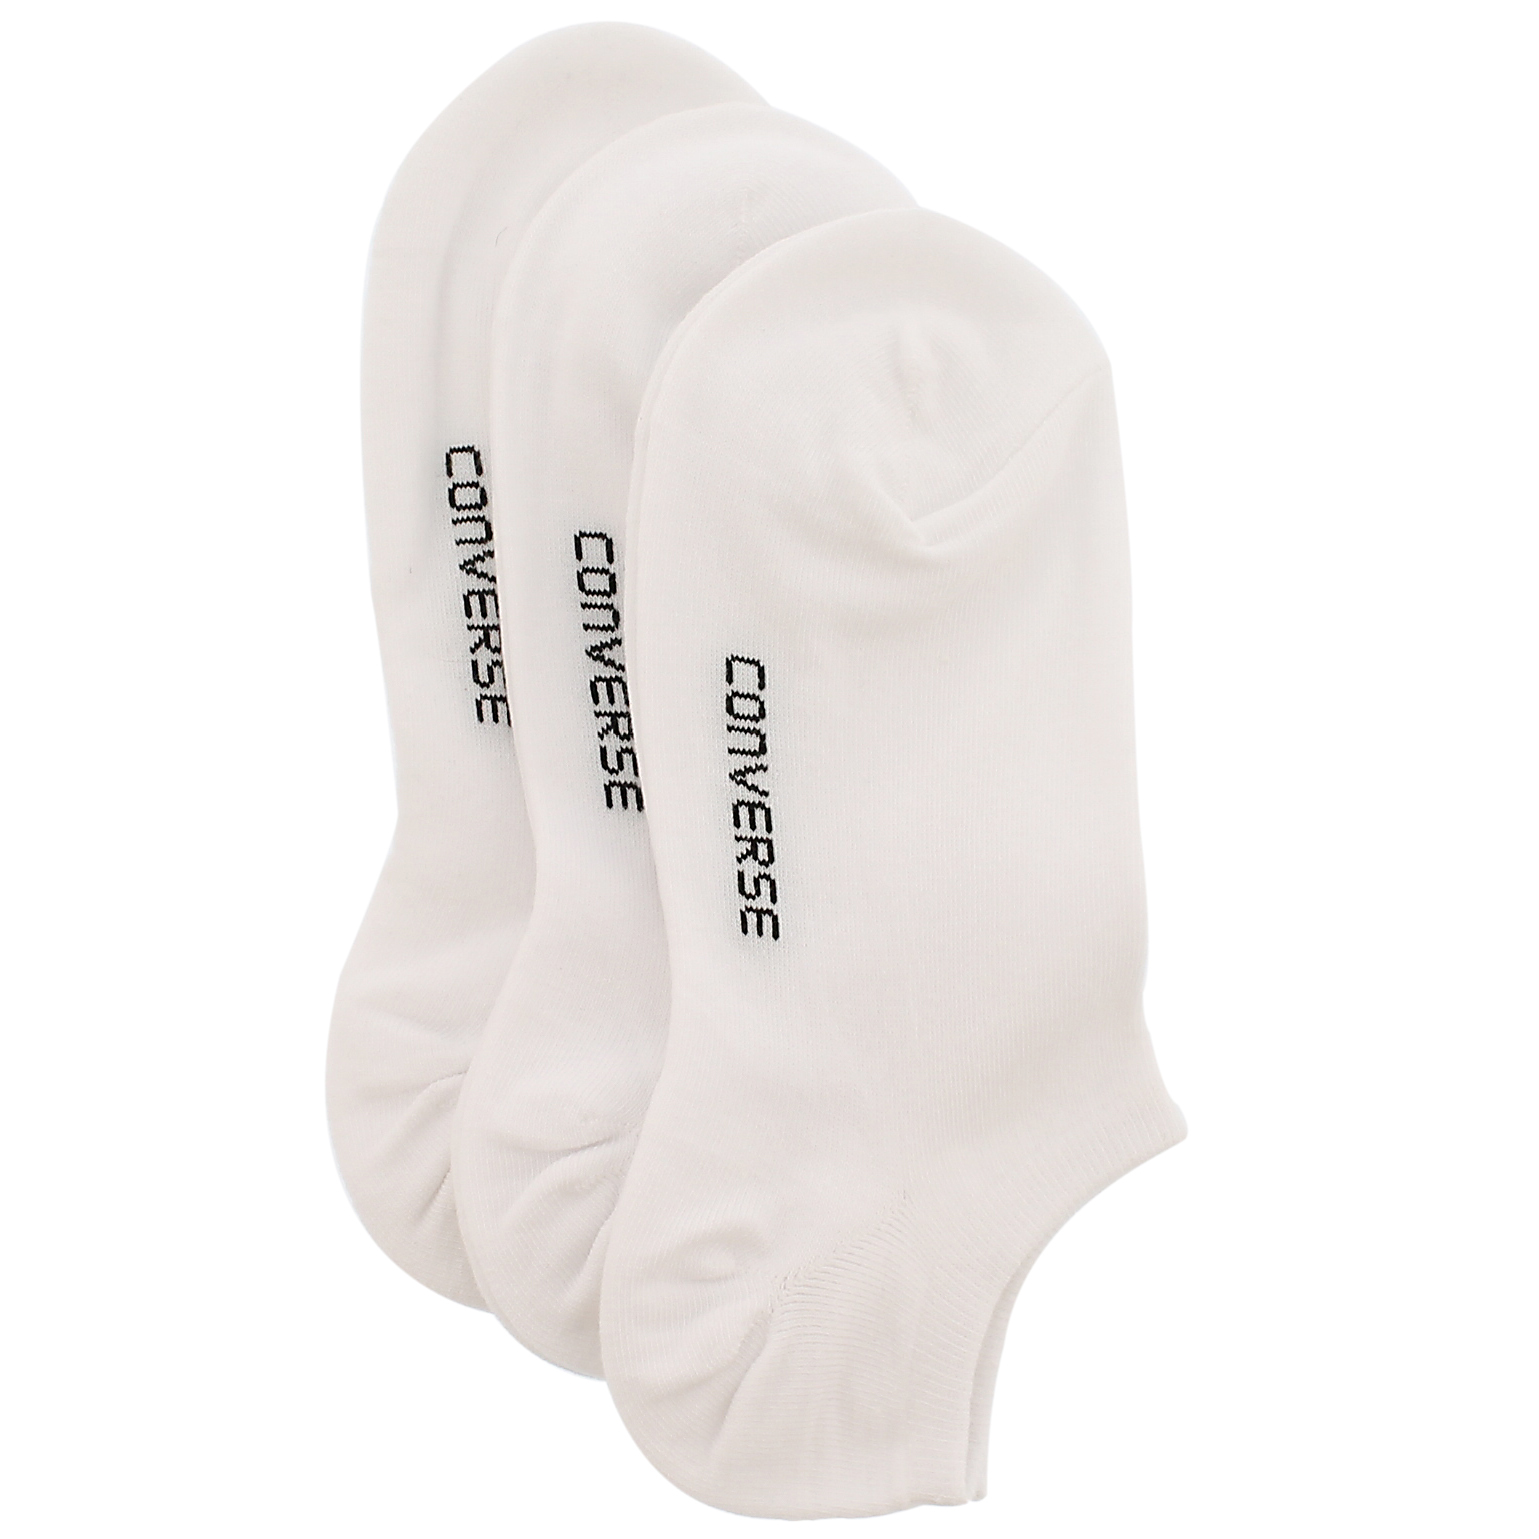 white converse white socks